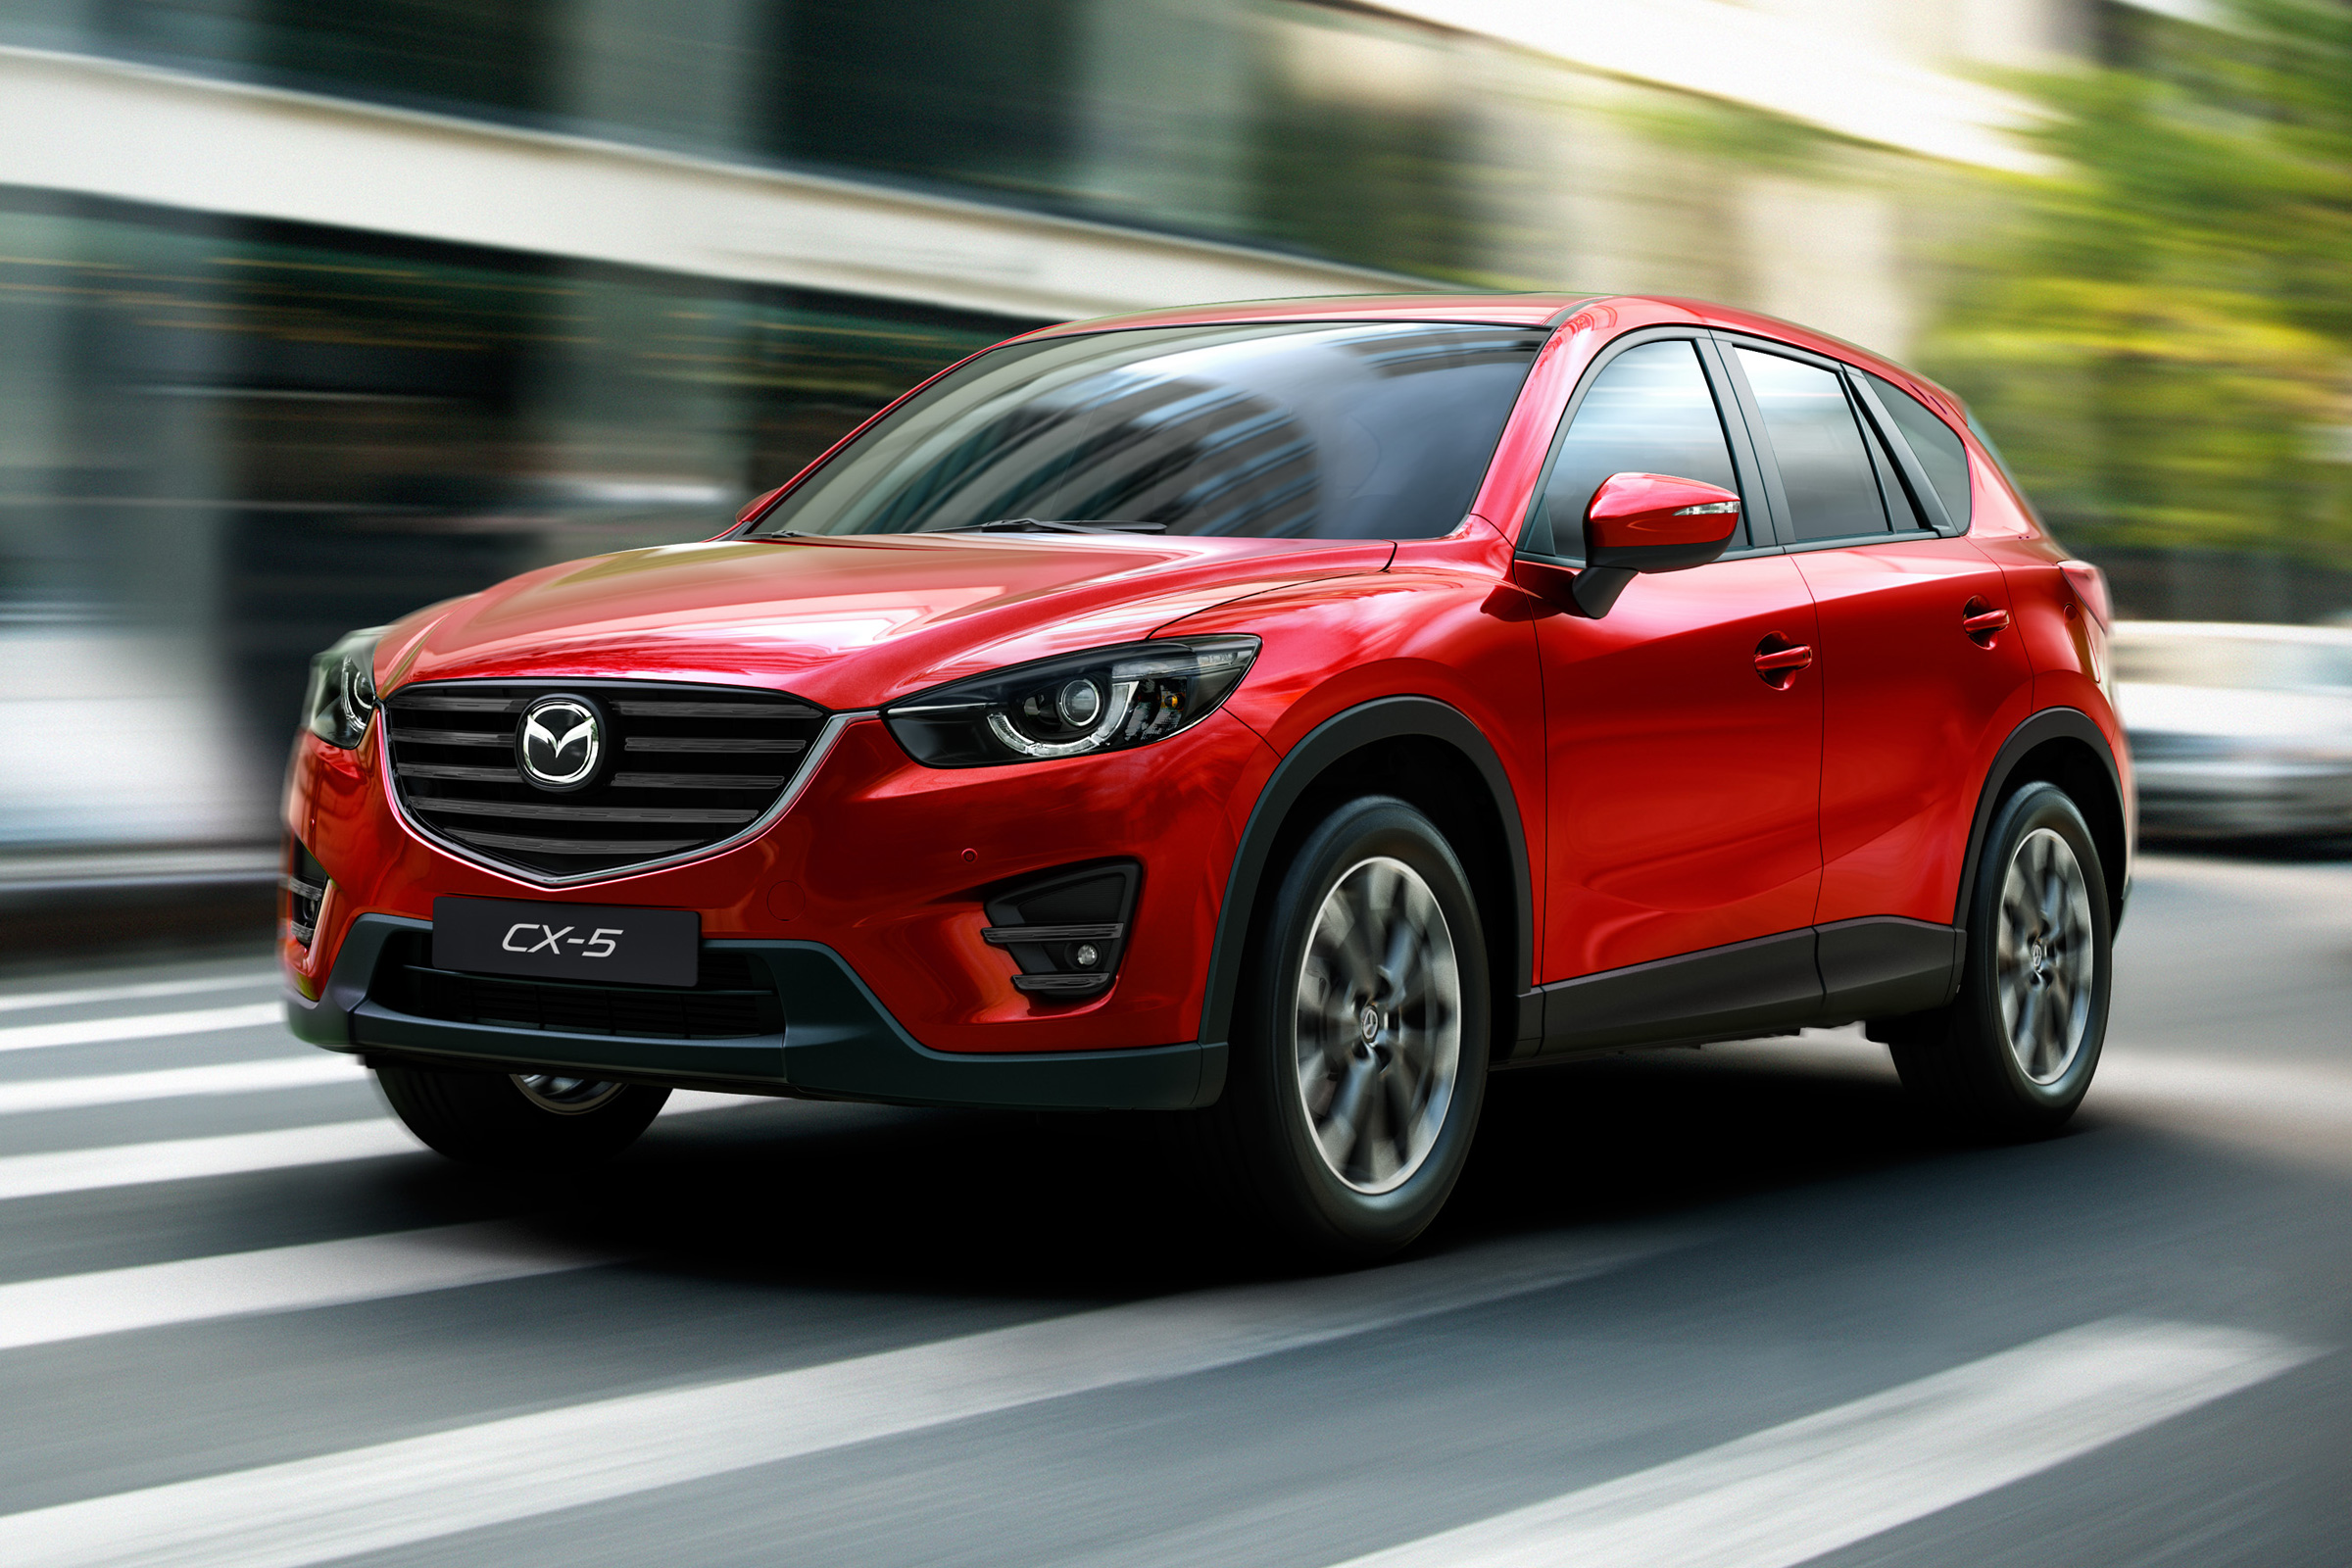 New 2015 Mazda Cx 5 Revealed Carbuyer